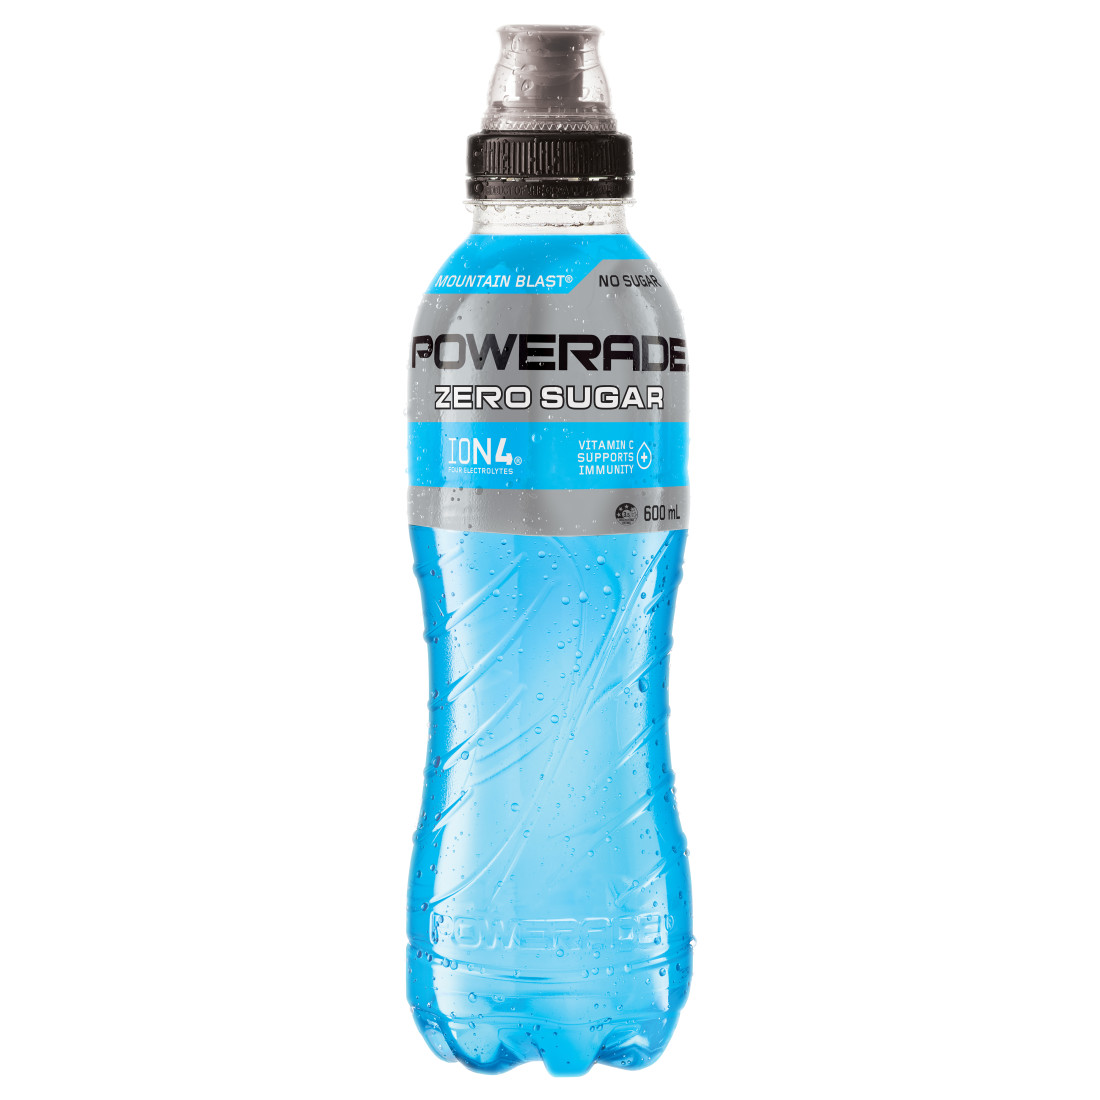 Powerade Zero Sugar Mountain Blast bottle